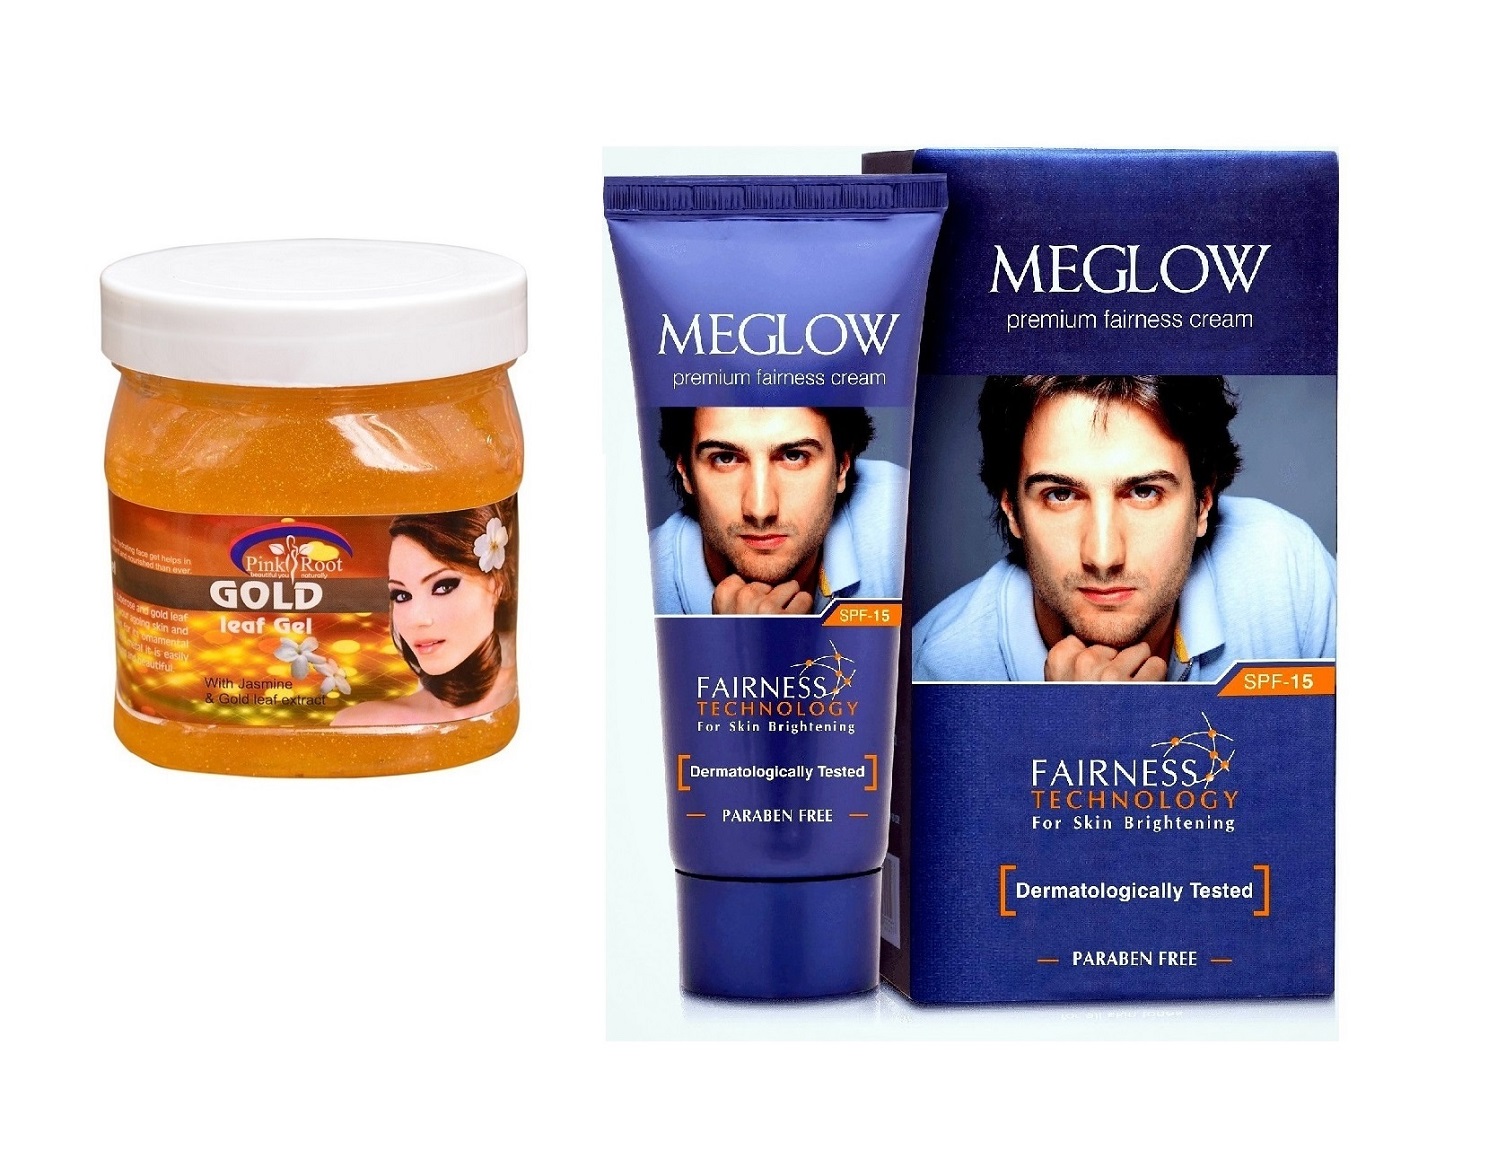 Buy Meglow Premium Fairness Cream Spf 15 50gm Pink Root Gold Leaf Gel